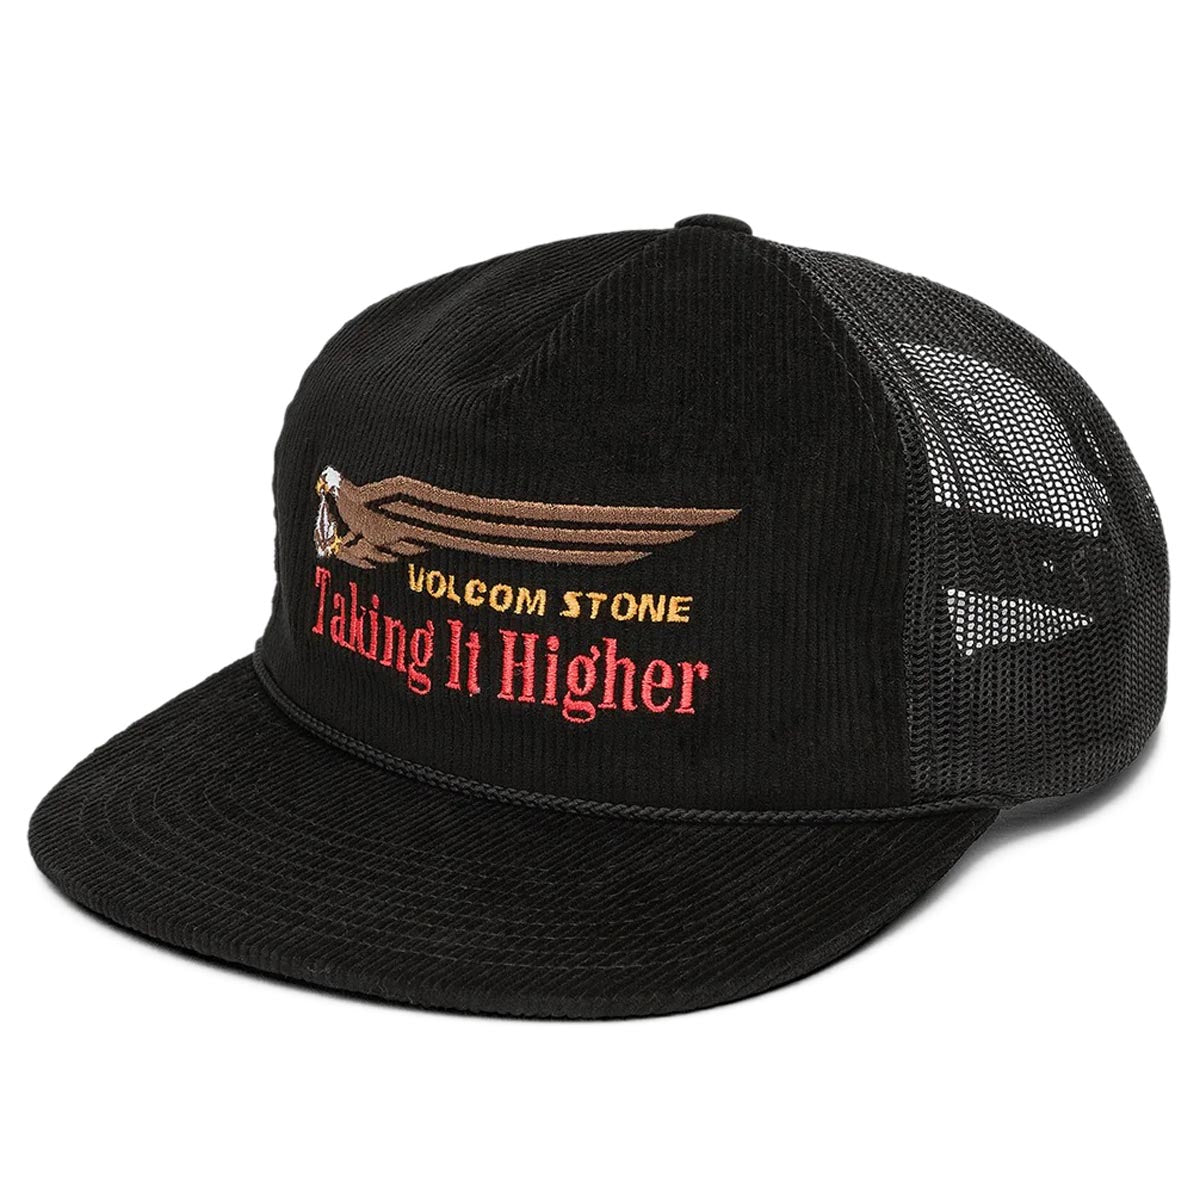 Volcom Take It Higher Trucker Hat - Black image 1